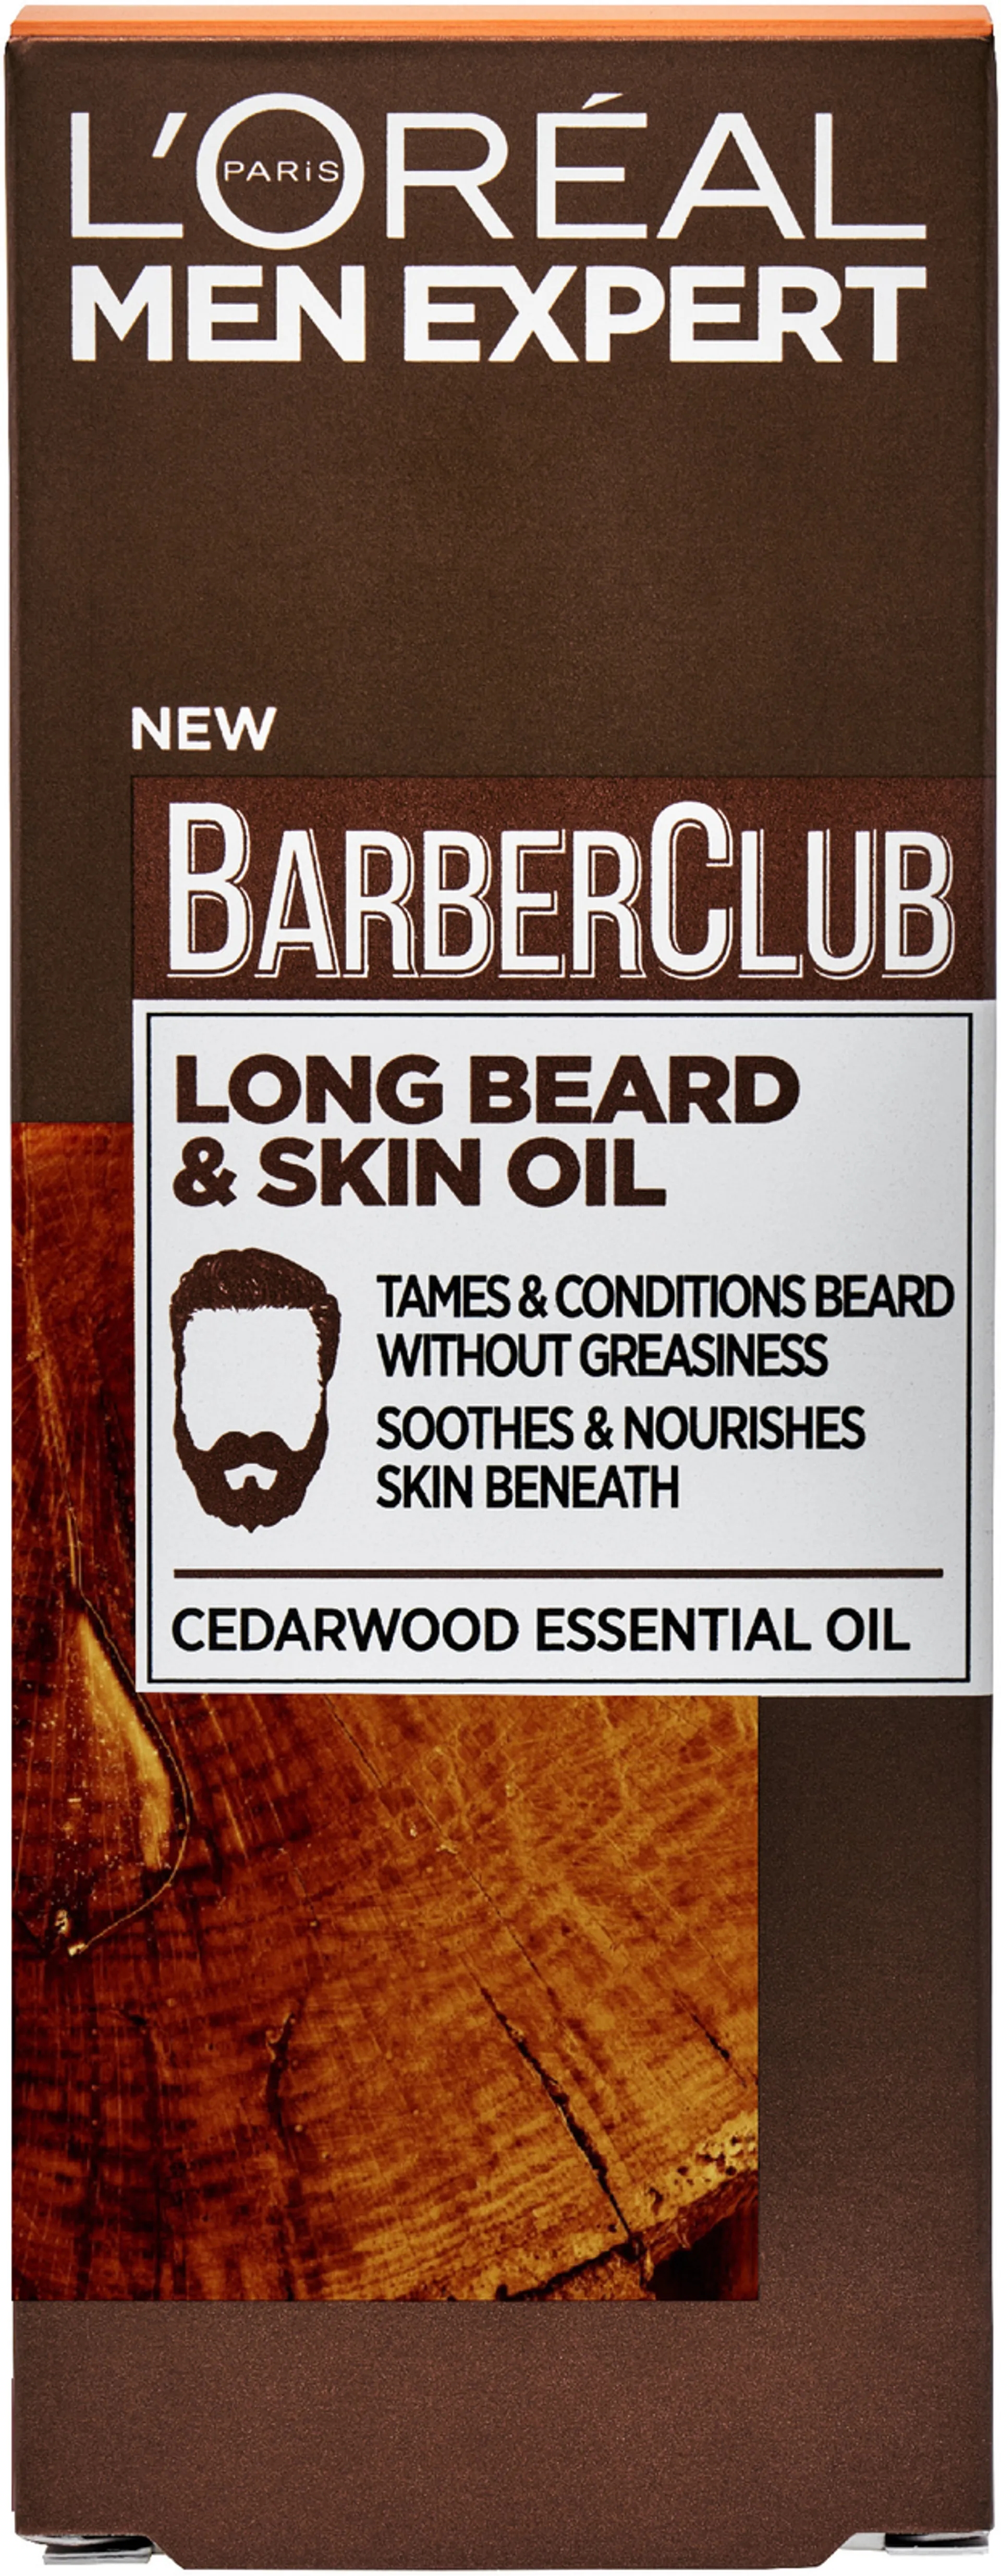 L'Oréal Paris Men Expert Barber Club Long Beard & Skin Oil öljy parralle ja iholle 30ml - 2